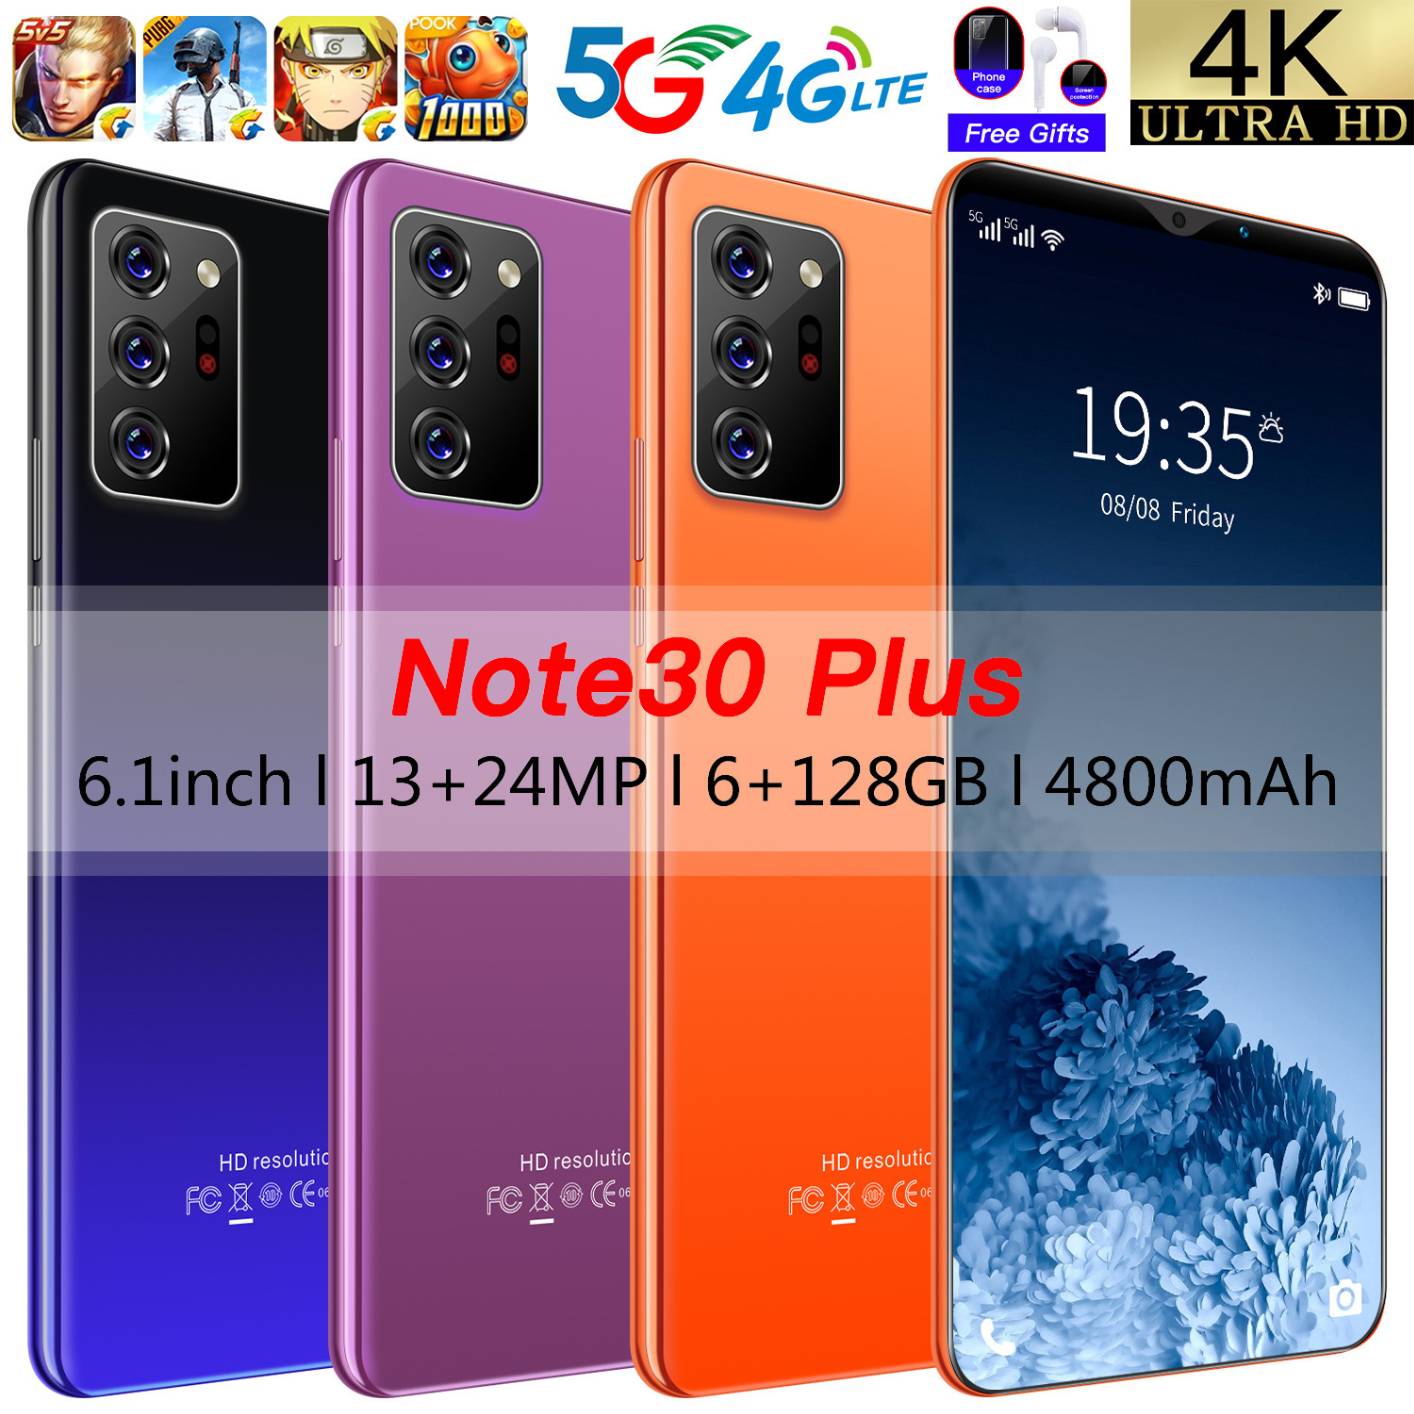 NEW 6.1Inch Note30 Plus 5G Smartphone Global Version 4800mAh FullScreen Android Celular 6+128GB 13+24MP Mobile Phone